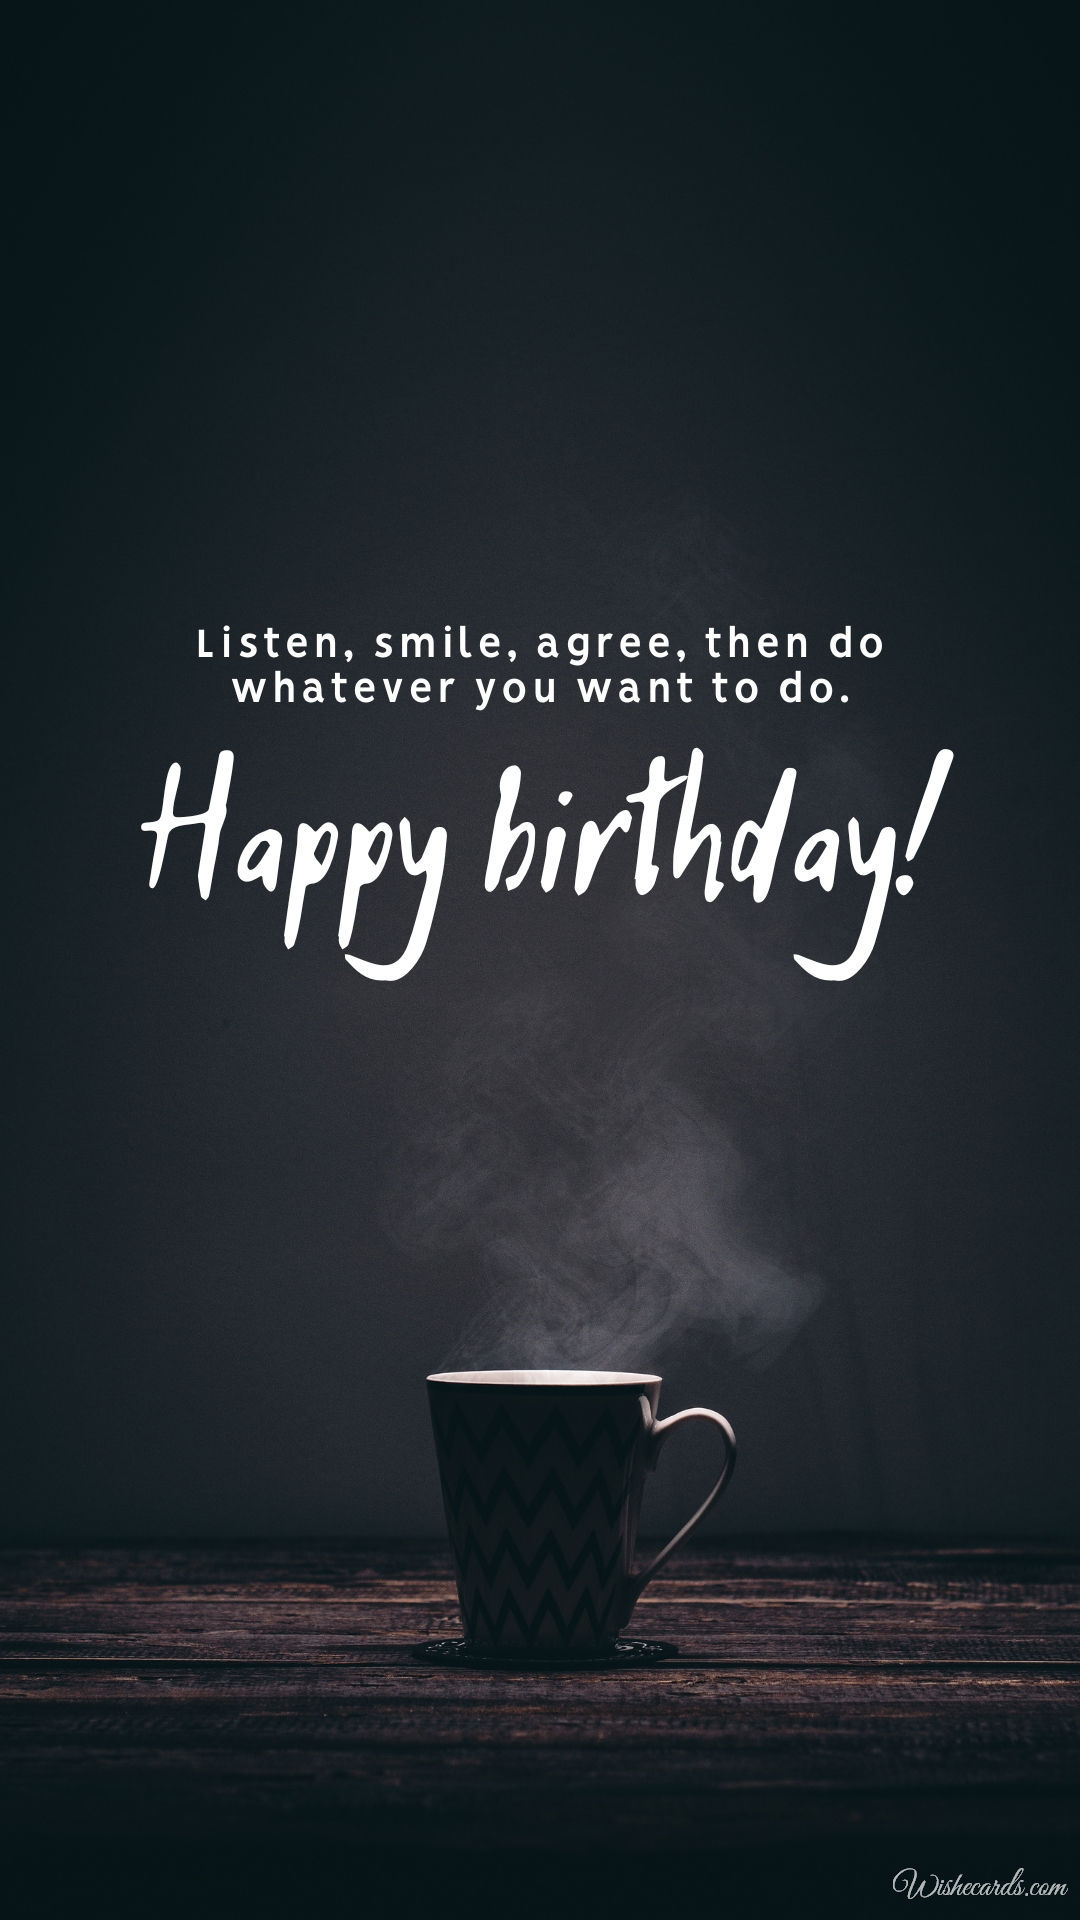 Business Happy Birthday Card